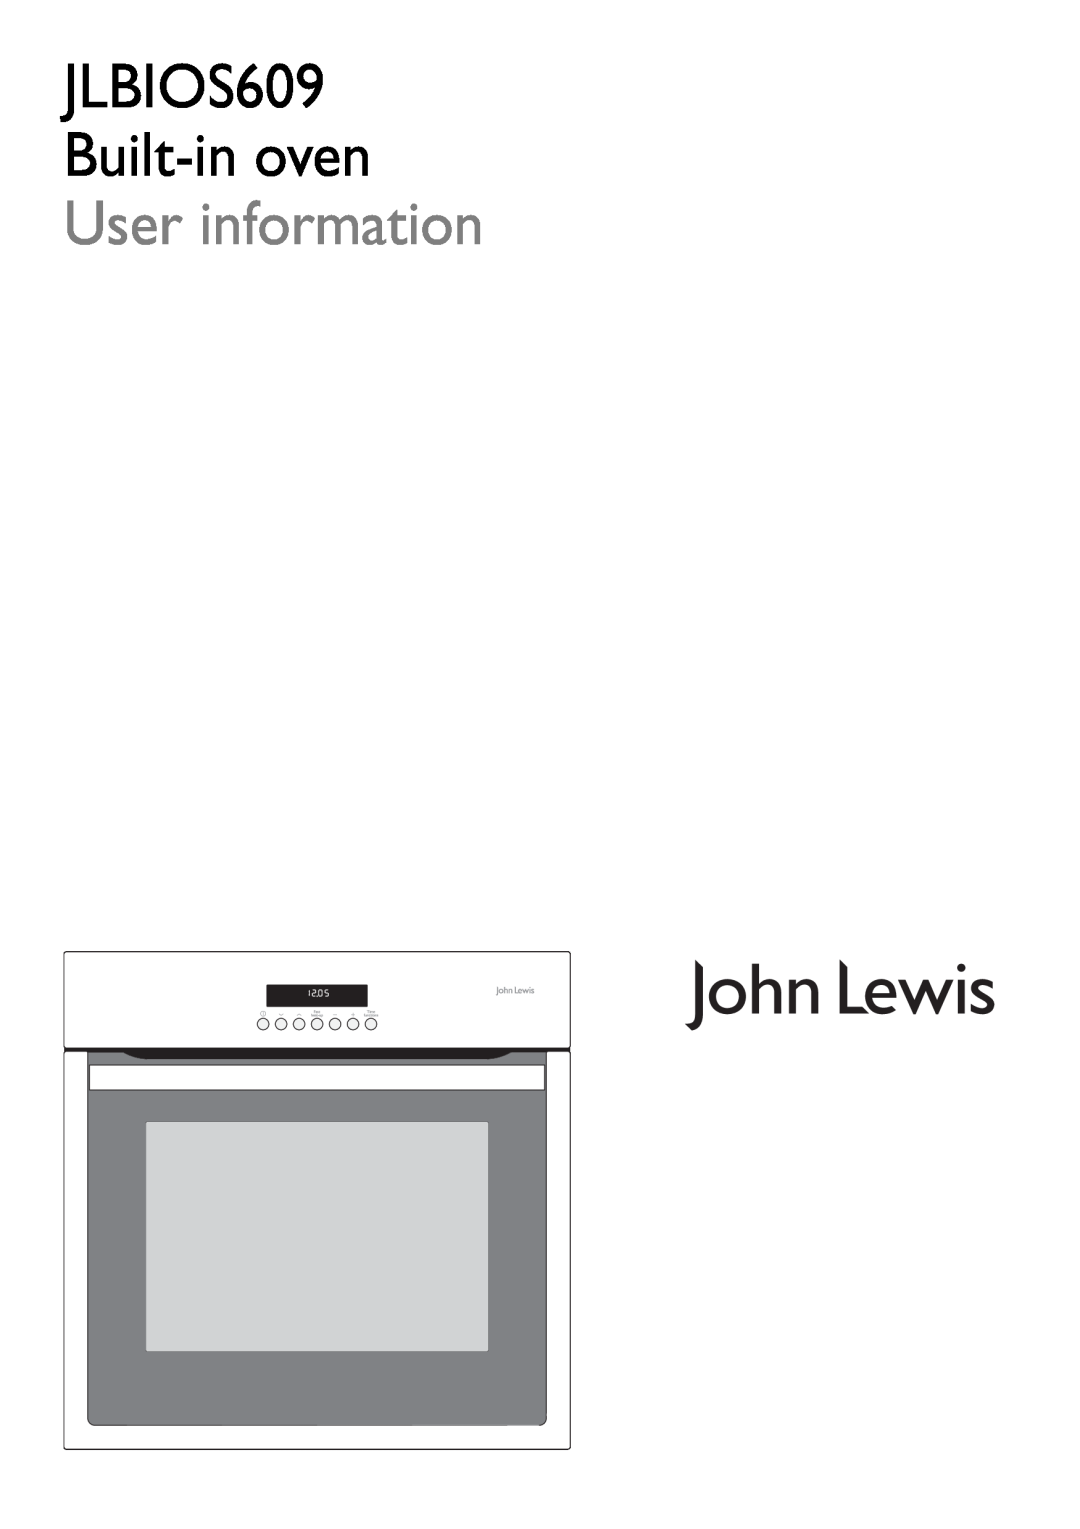 John Lewis manual JLBIOS609 Built-inoven User information 